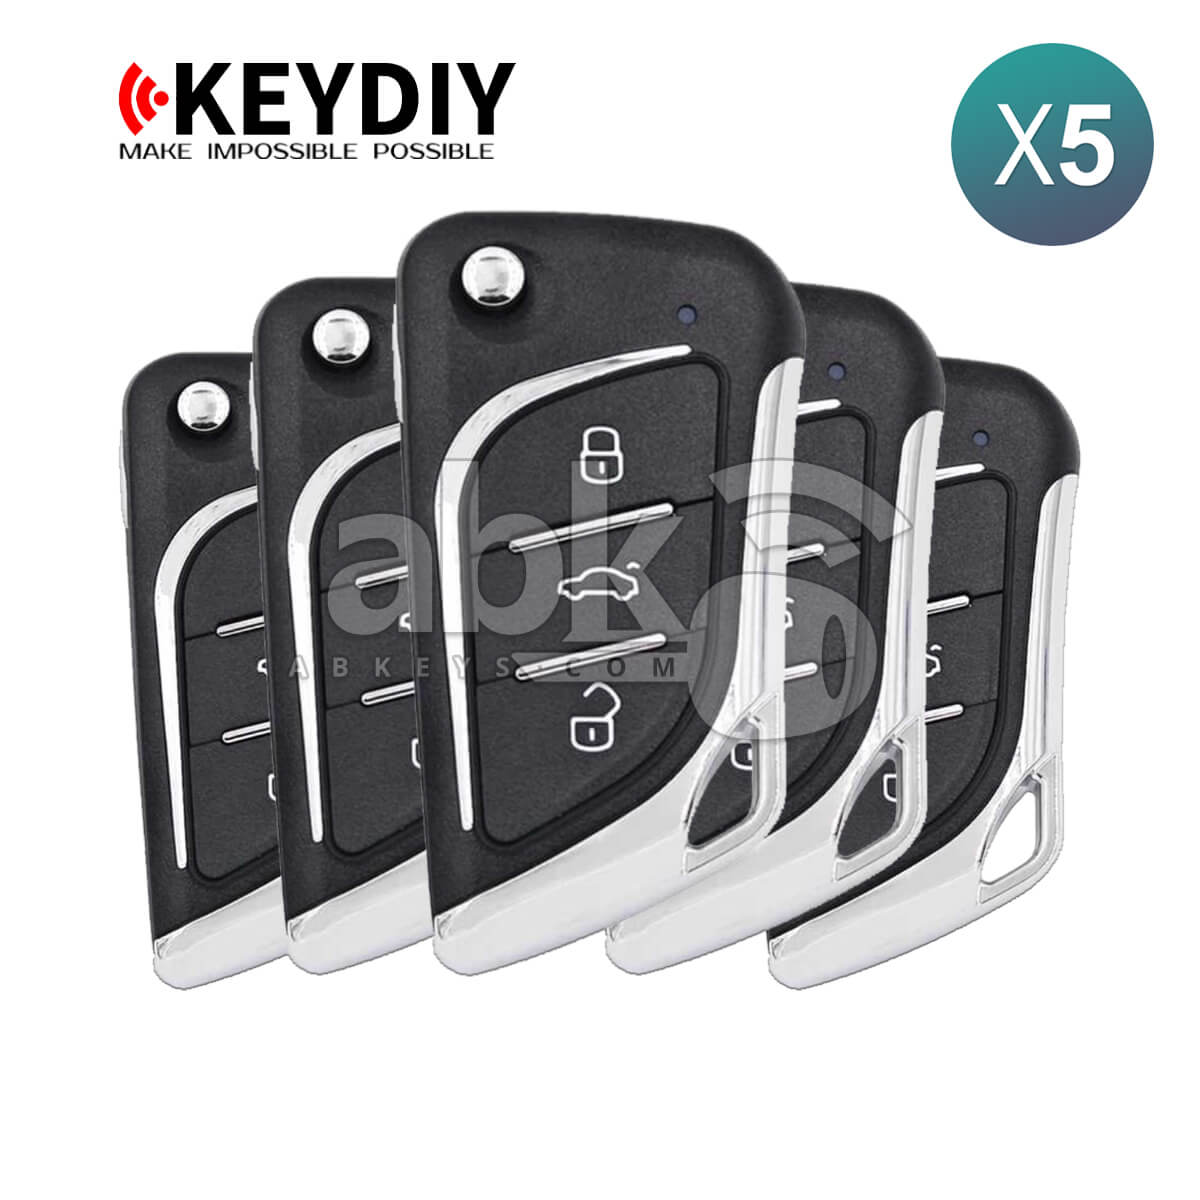 KeyDiy KD Universal Remote B Series Cadillac Type With 3Buttons B30 5Pcs Bundle - ABK-1010-B30-OFF5